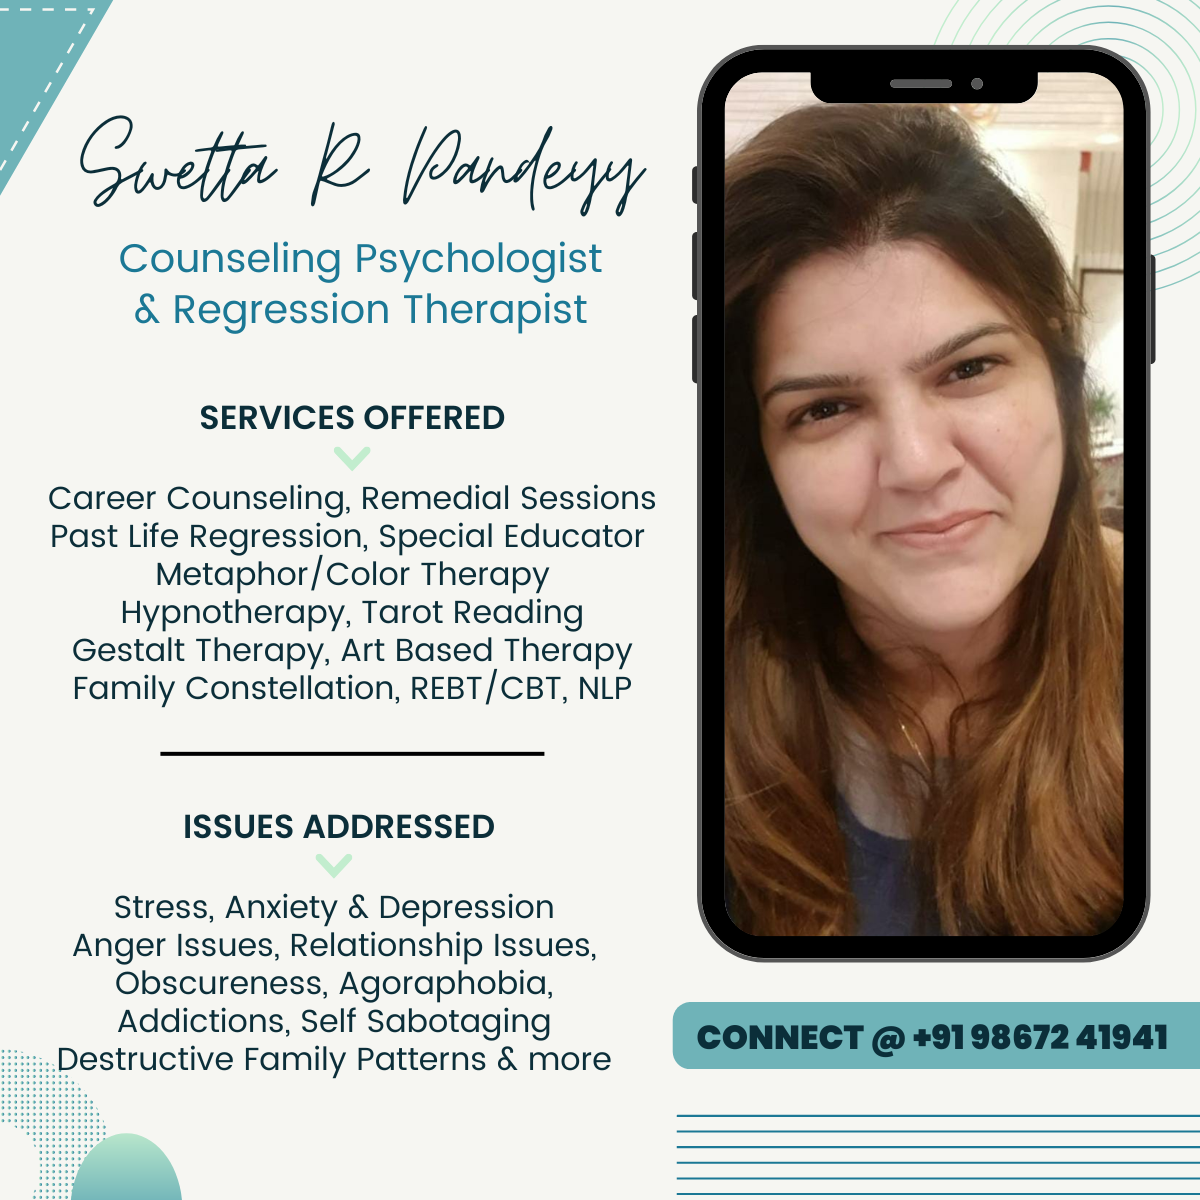 Sweta R Pandey - Counselling Psychologist & Regression Therapist- Pondicherry